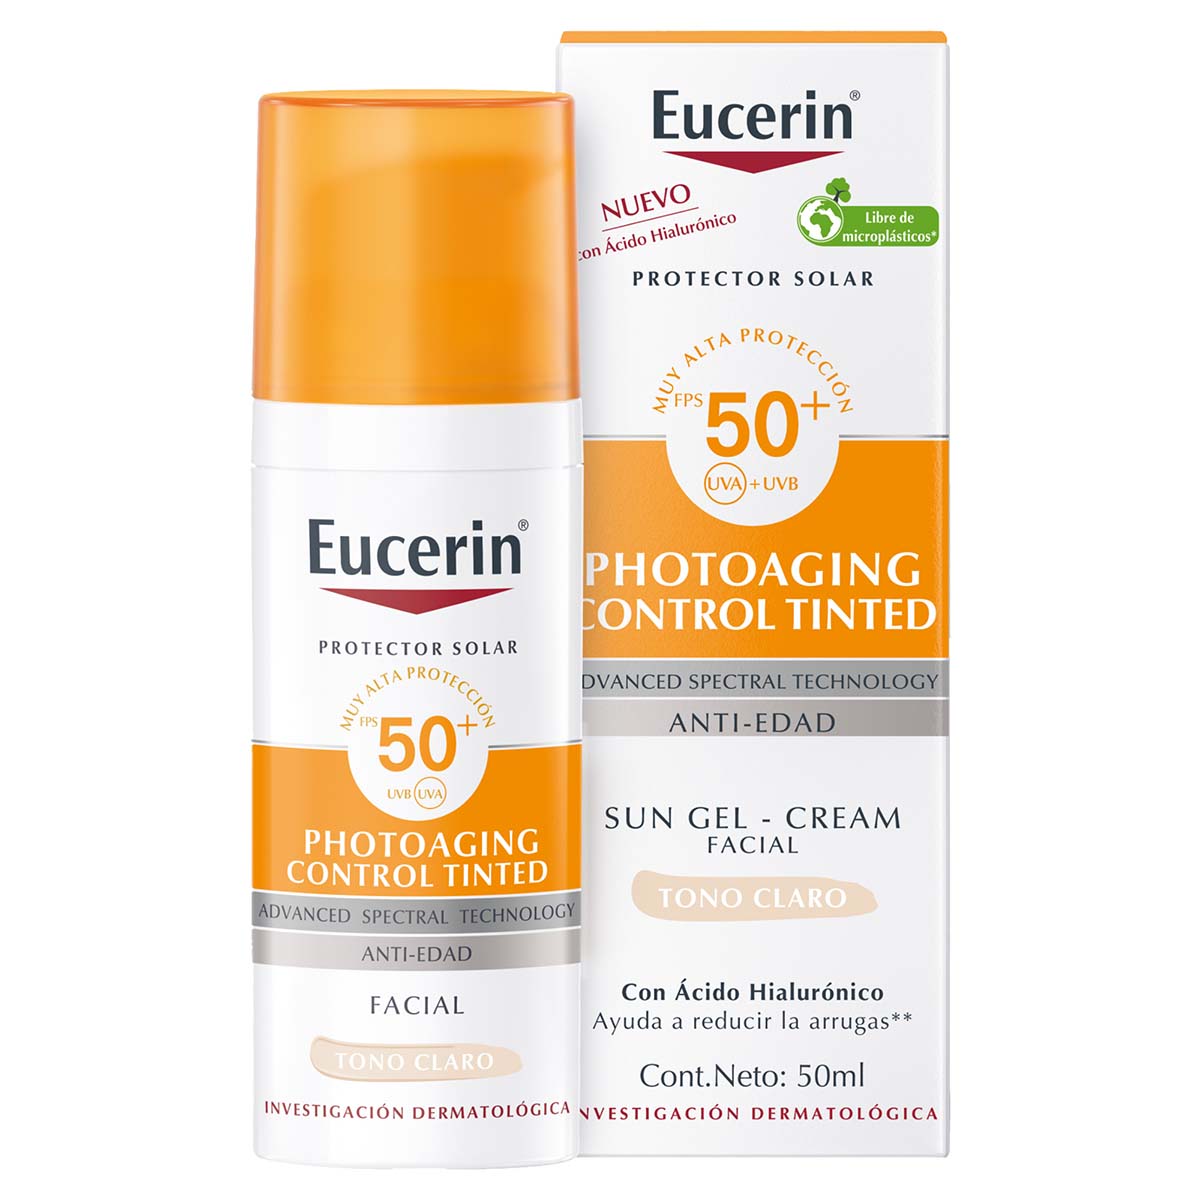 Eucerin protector solar facial photoaging control tinted tono claro FPS50+ 50ml.